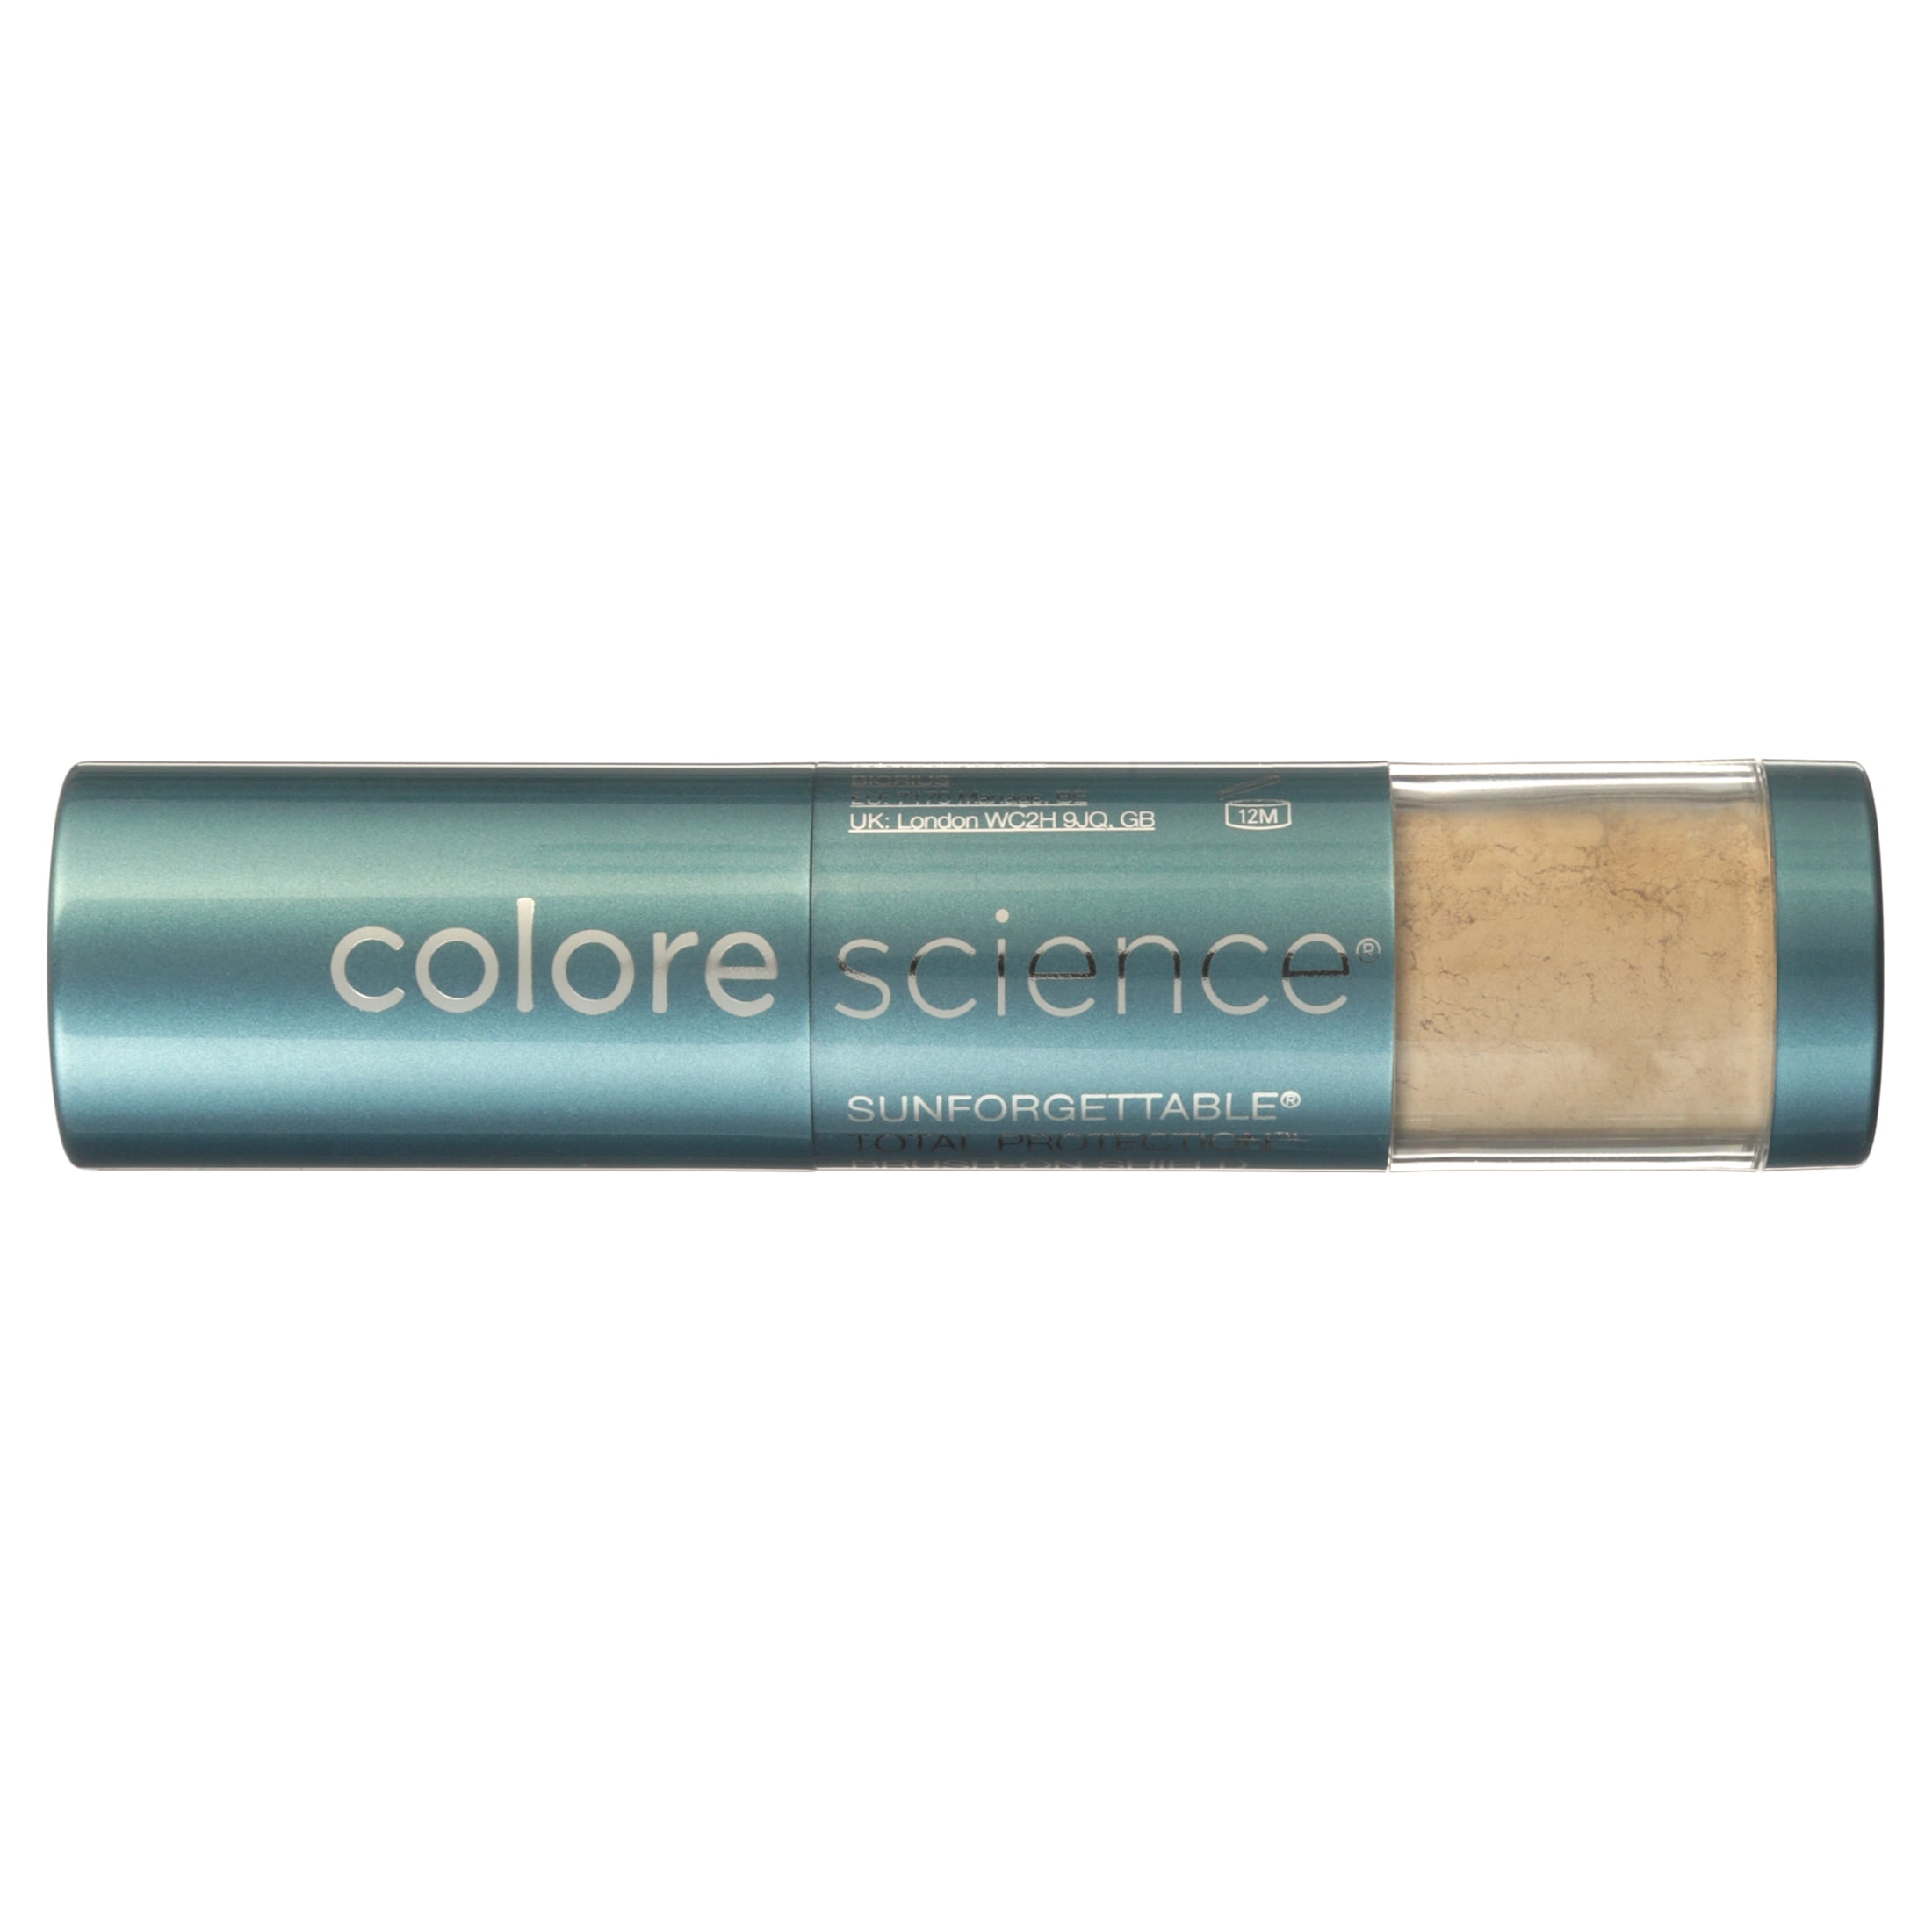 Colorescience Sunforgettable SPF 50 Total Protection Mineral Powder Brush, Medium Matte, 0.21 oz